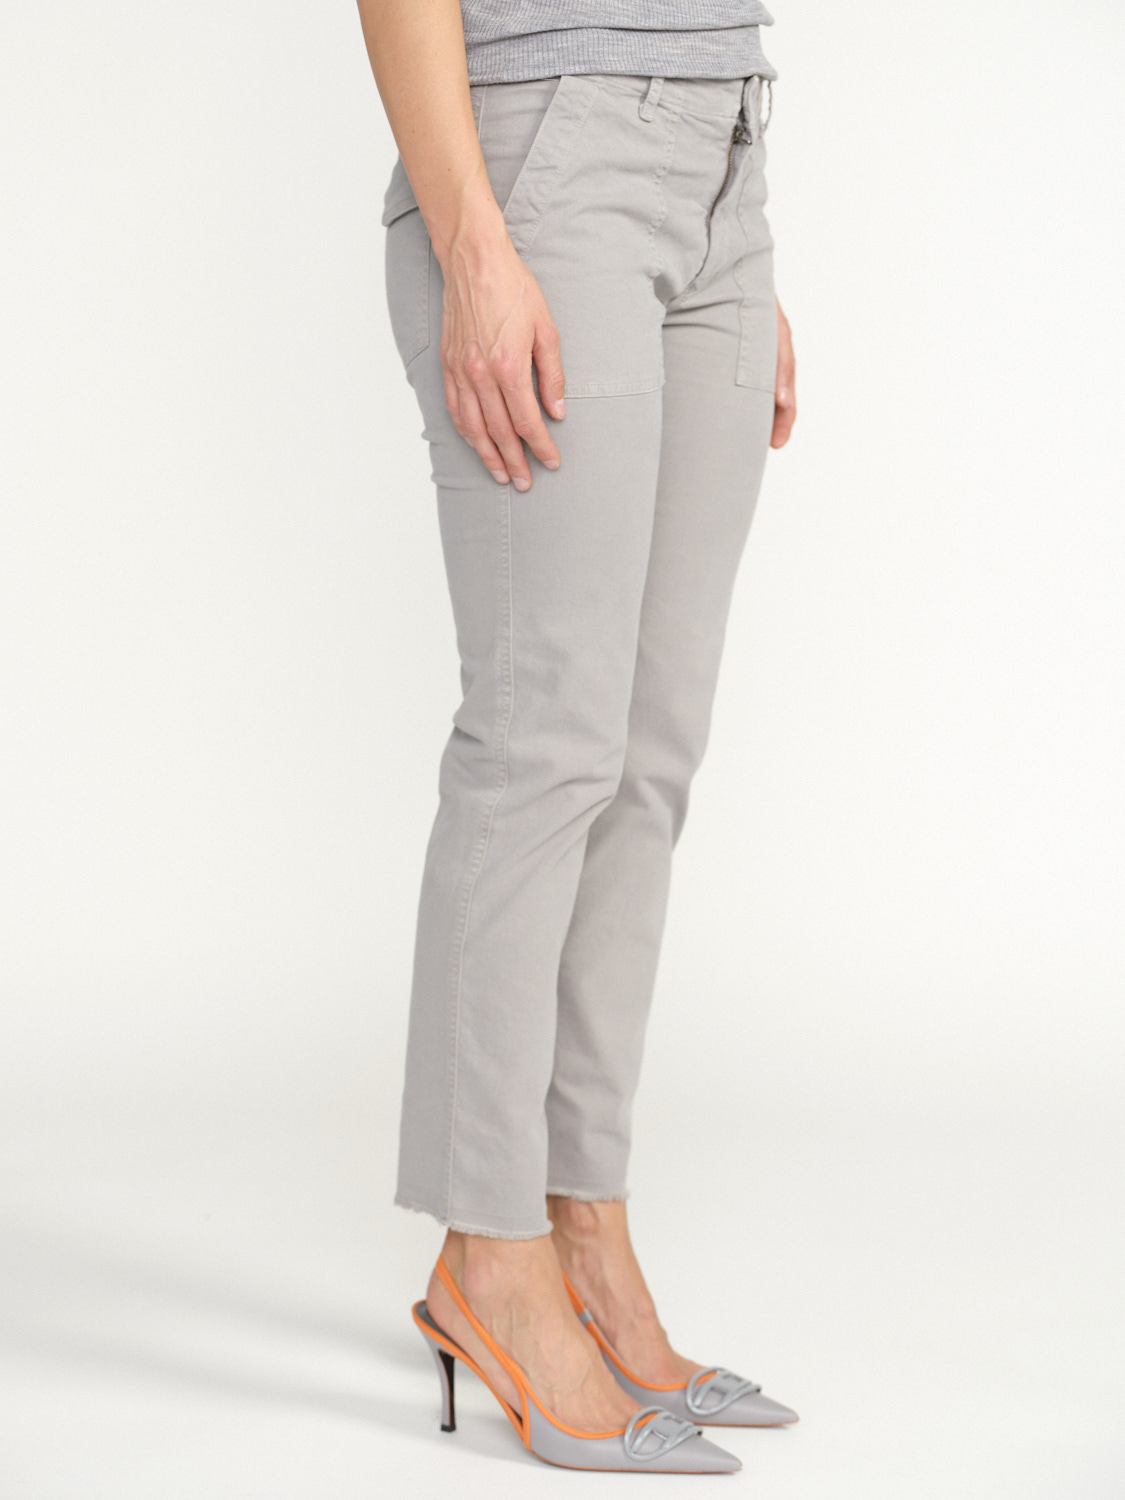 Nili Lotan Jenna Pant - Pants with large pockets  grey 34